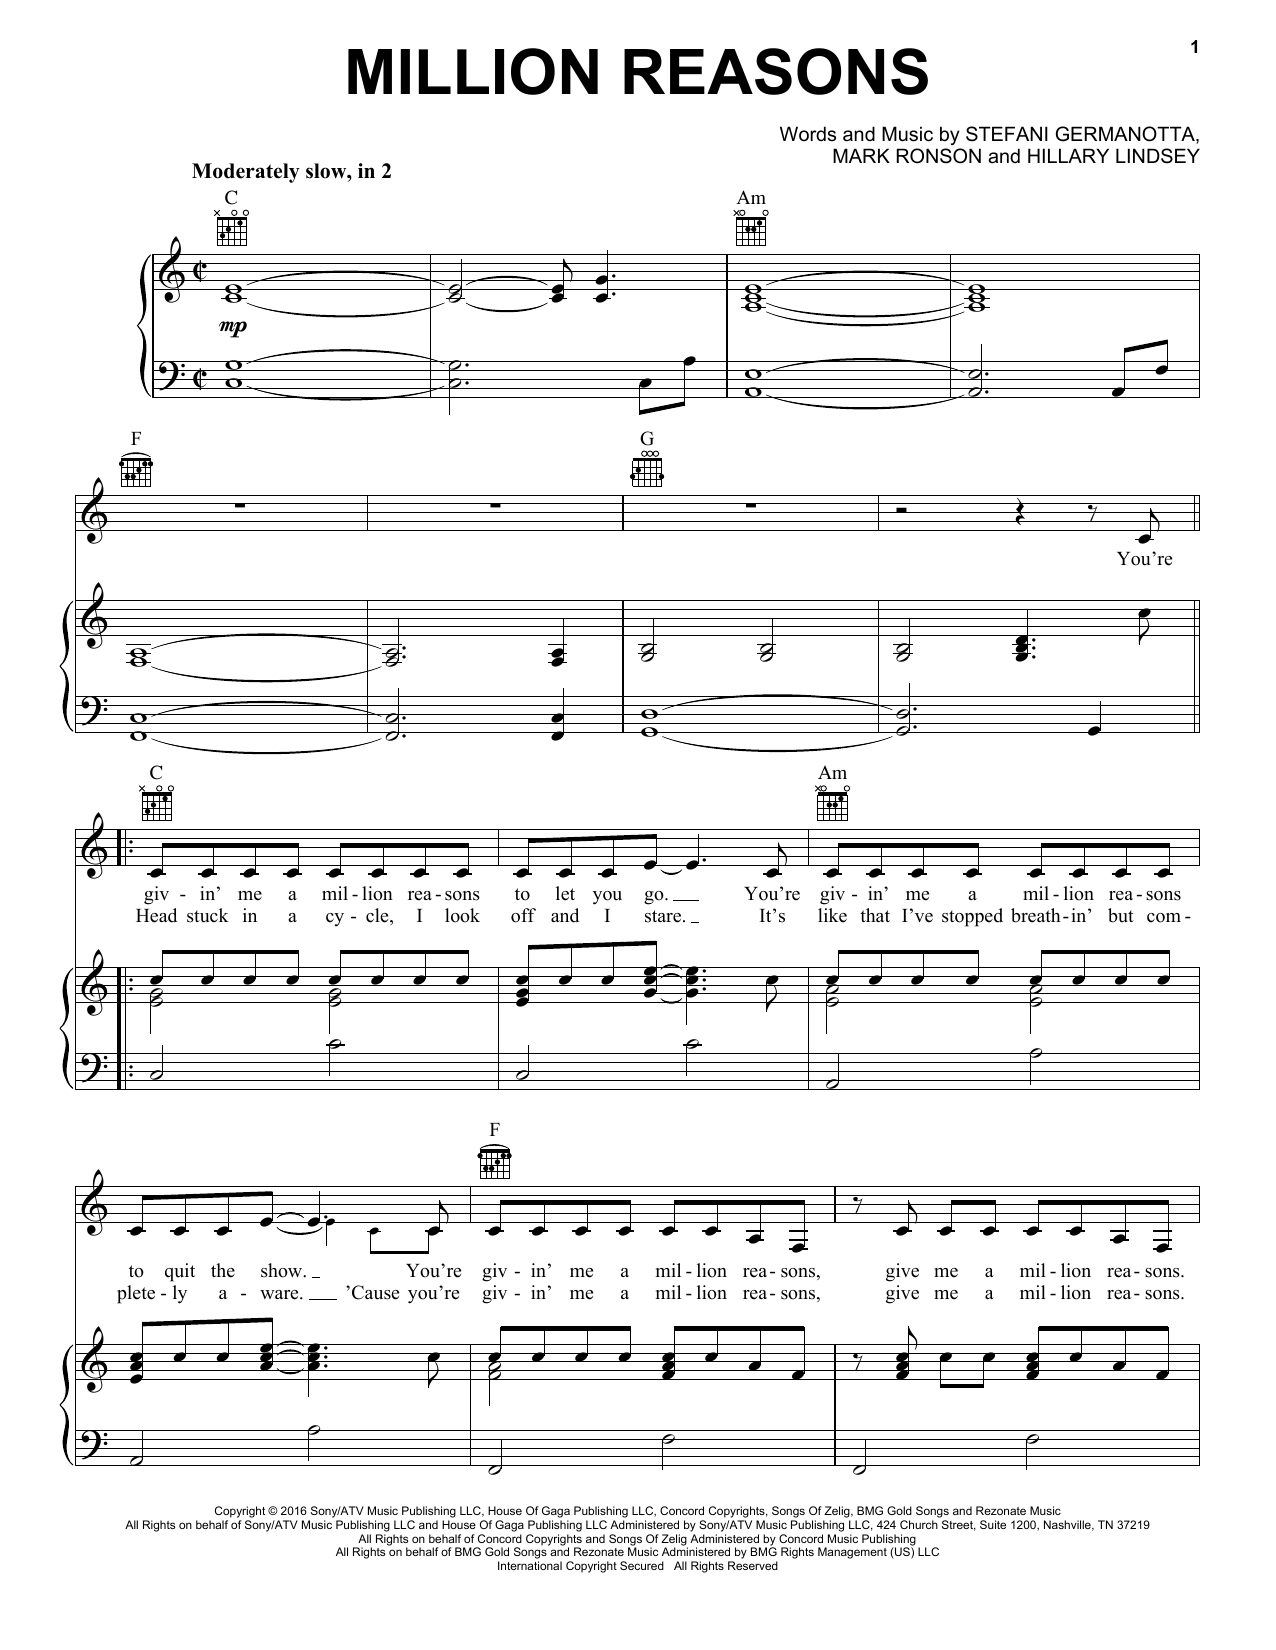 Lady Gaga Million Reasons Sheet Music Notes & Chords for Trombone Duet - Download or Print PDF